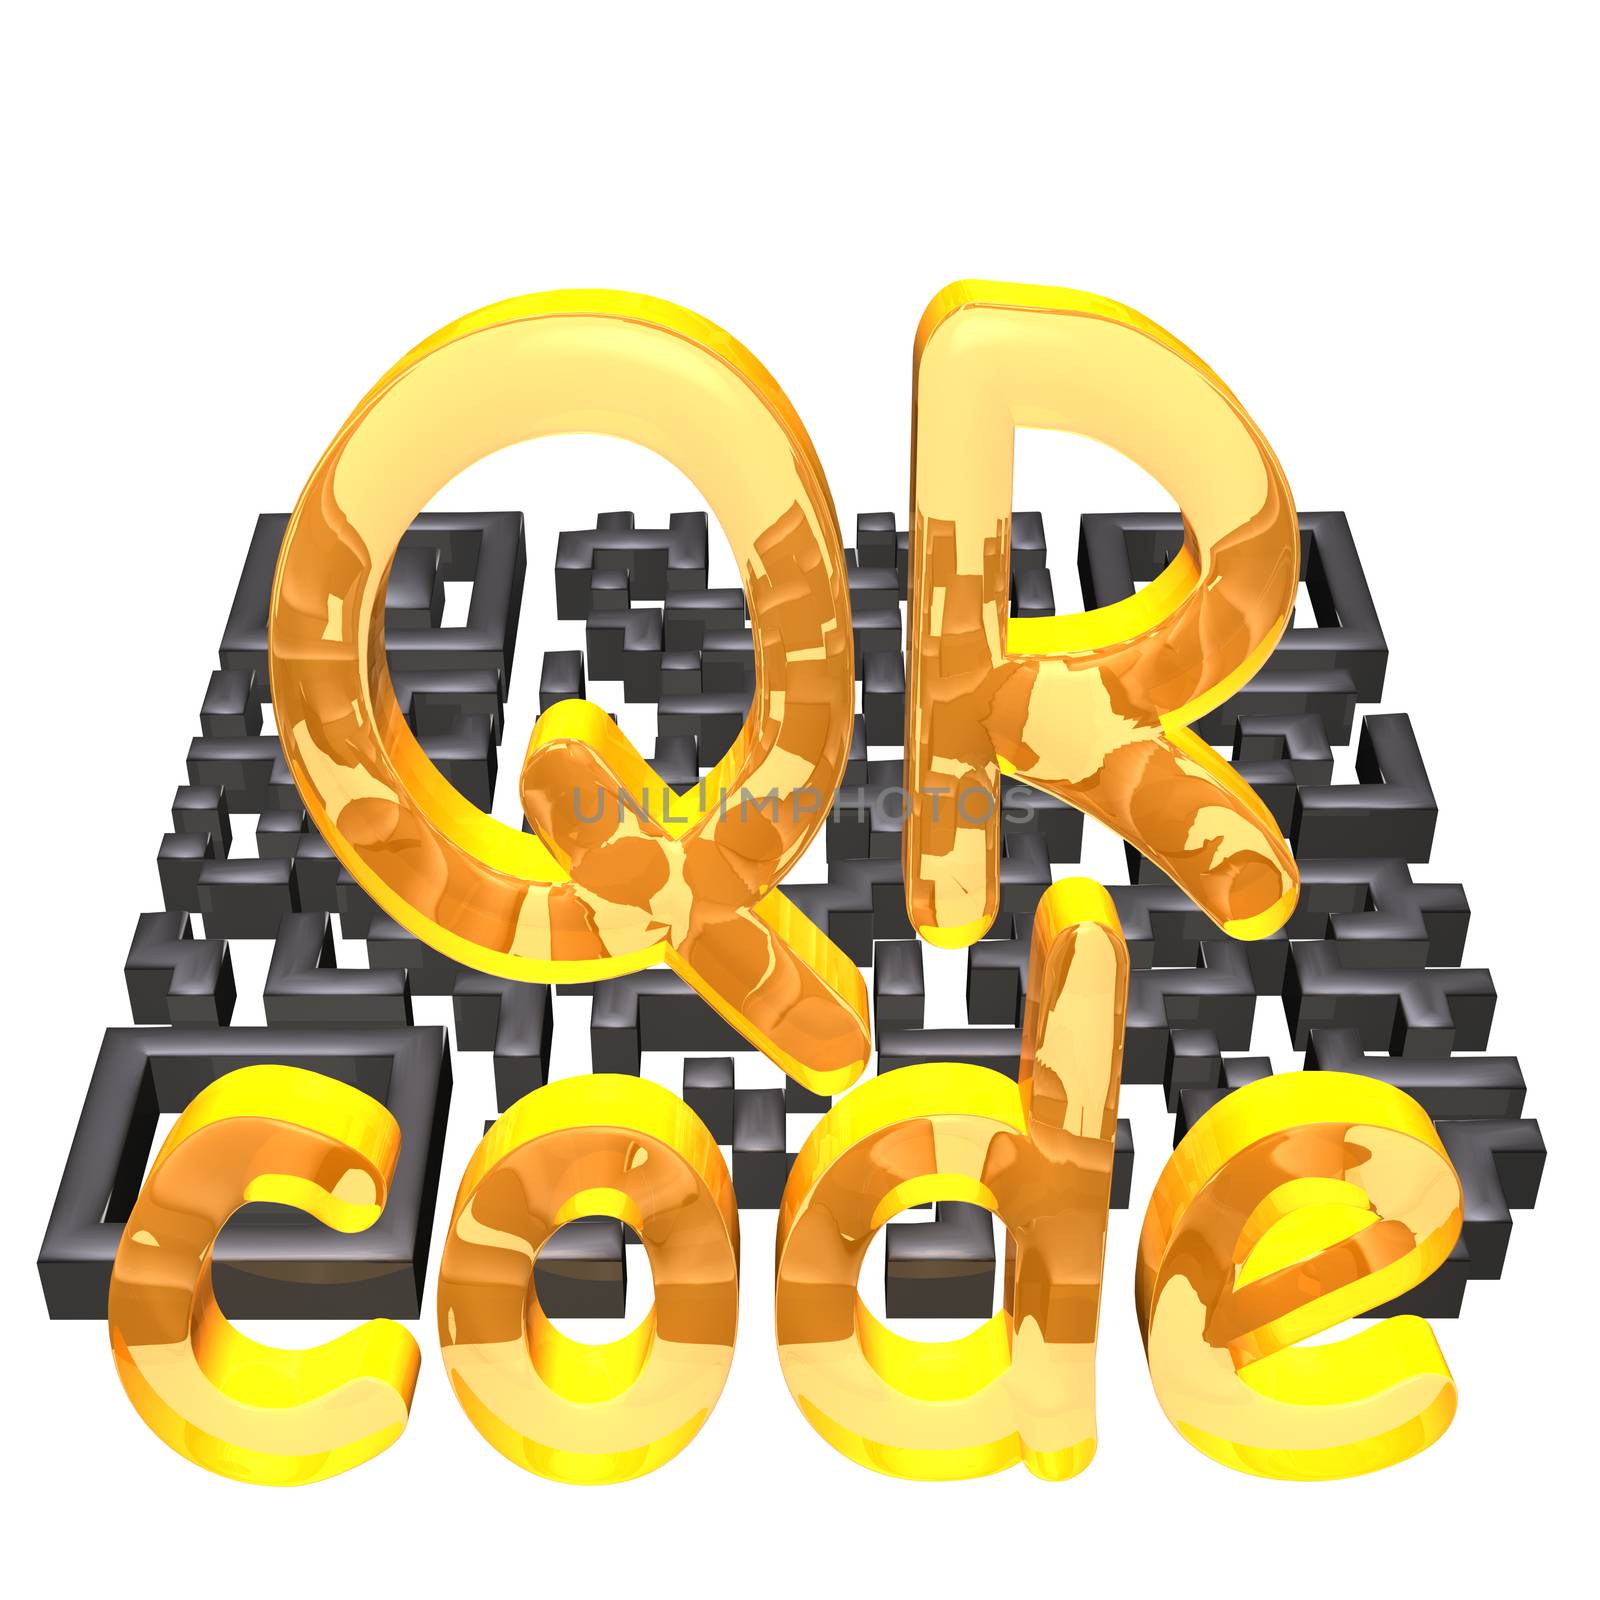 QR code concept by richter1910